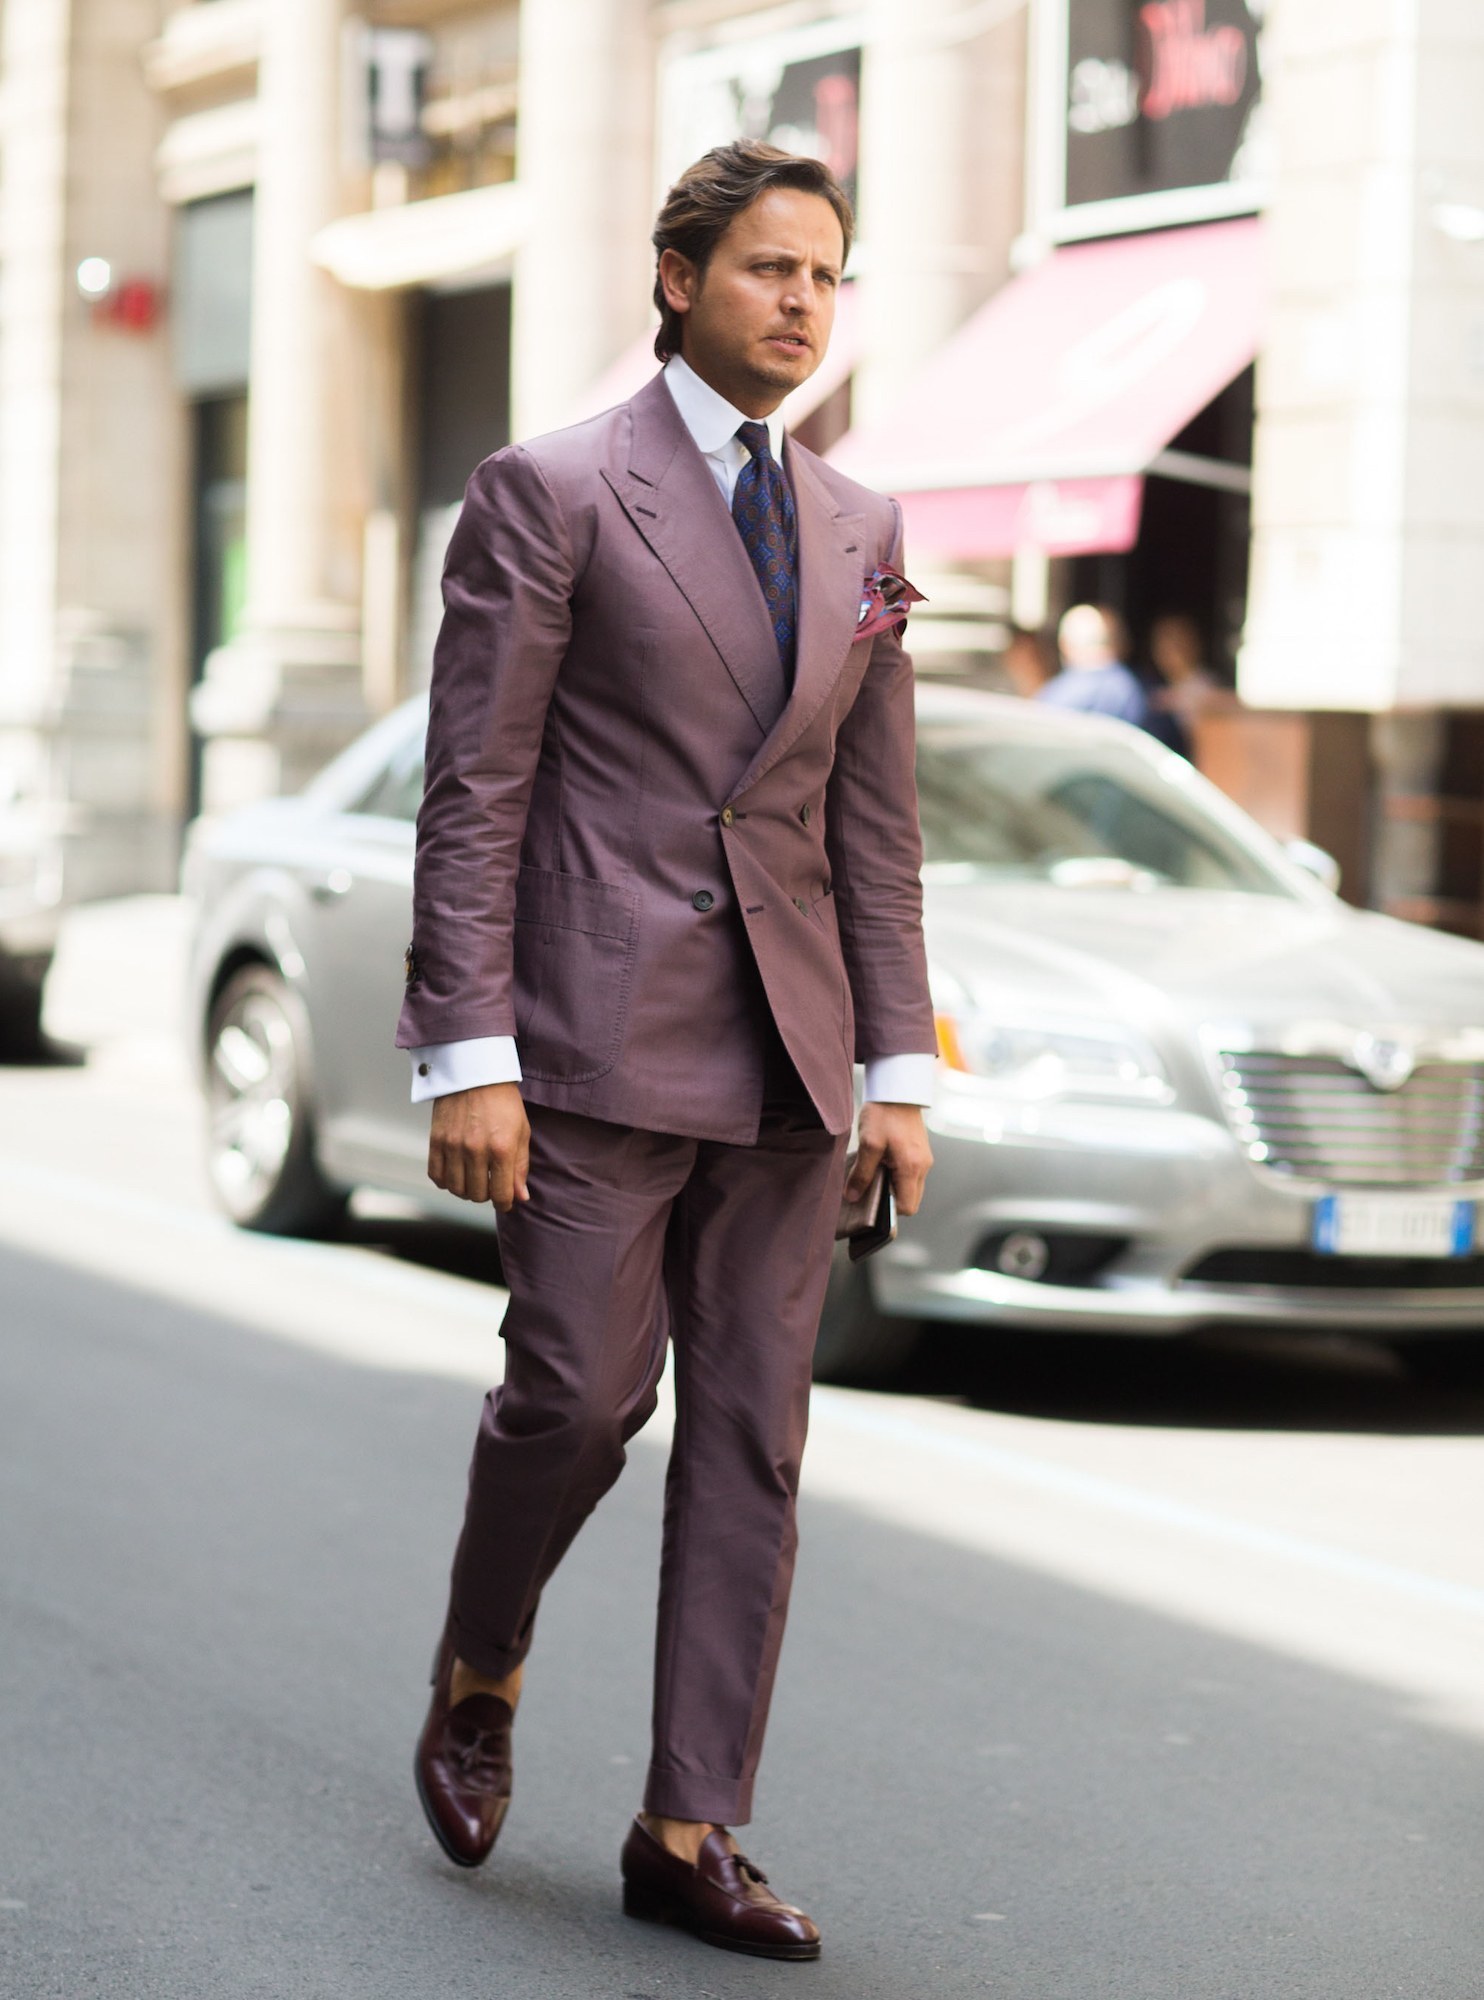 Beautiful Light Purple Suit Designs 2021 || Latest Lilac Color Punjabi Suit  Ideas || by Look Stylish - YouTube